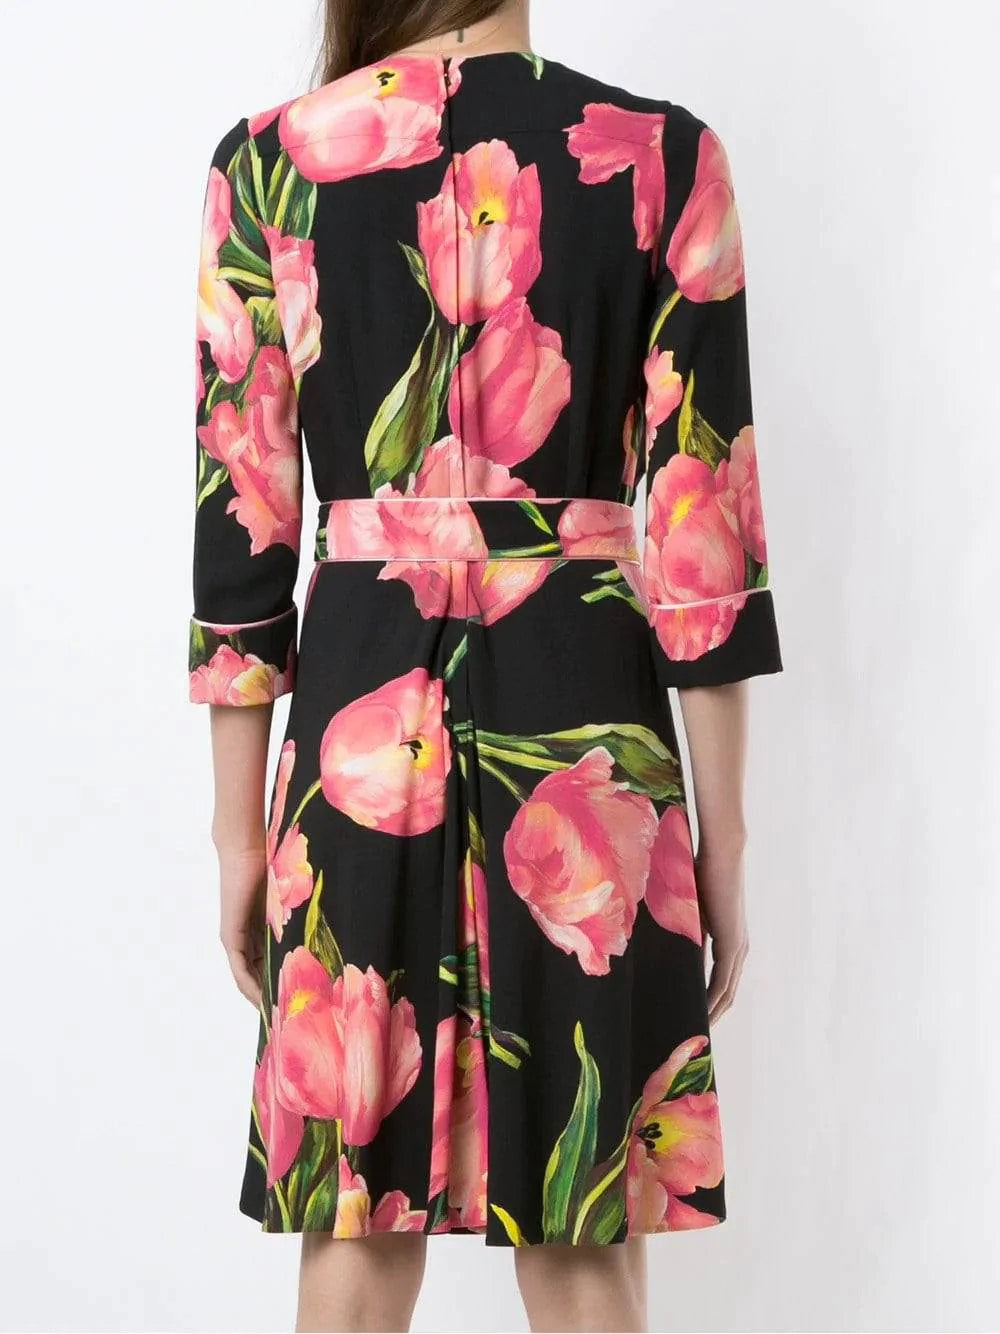 Dolce & Gabbana Floral-Print Dress